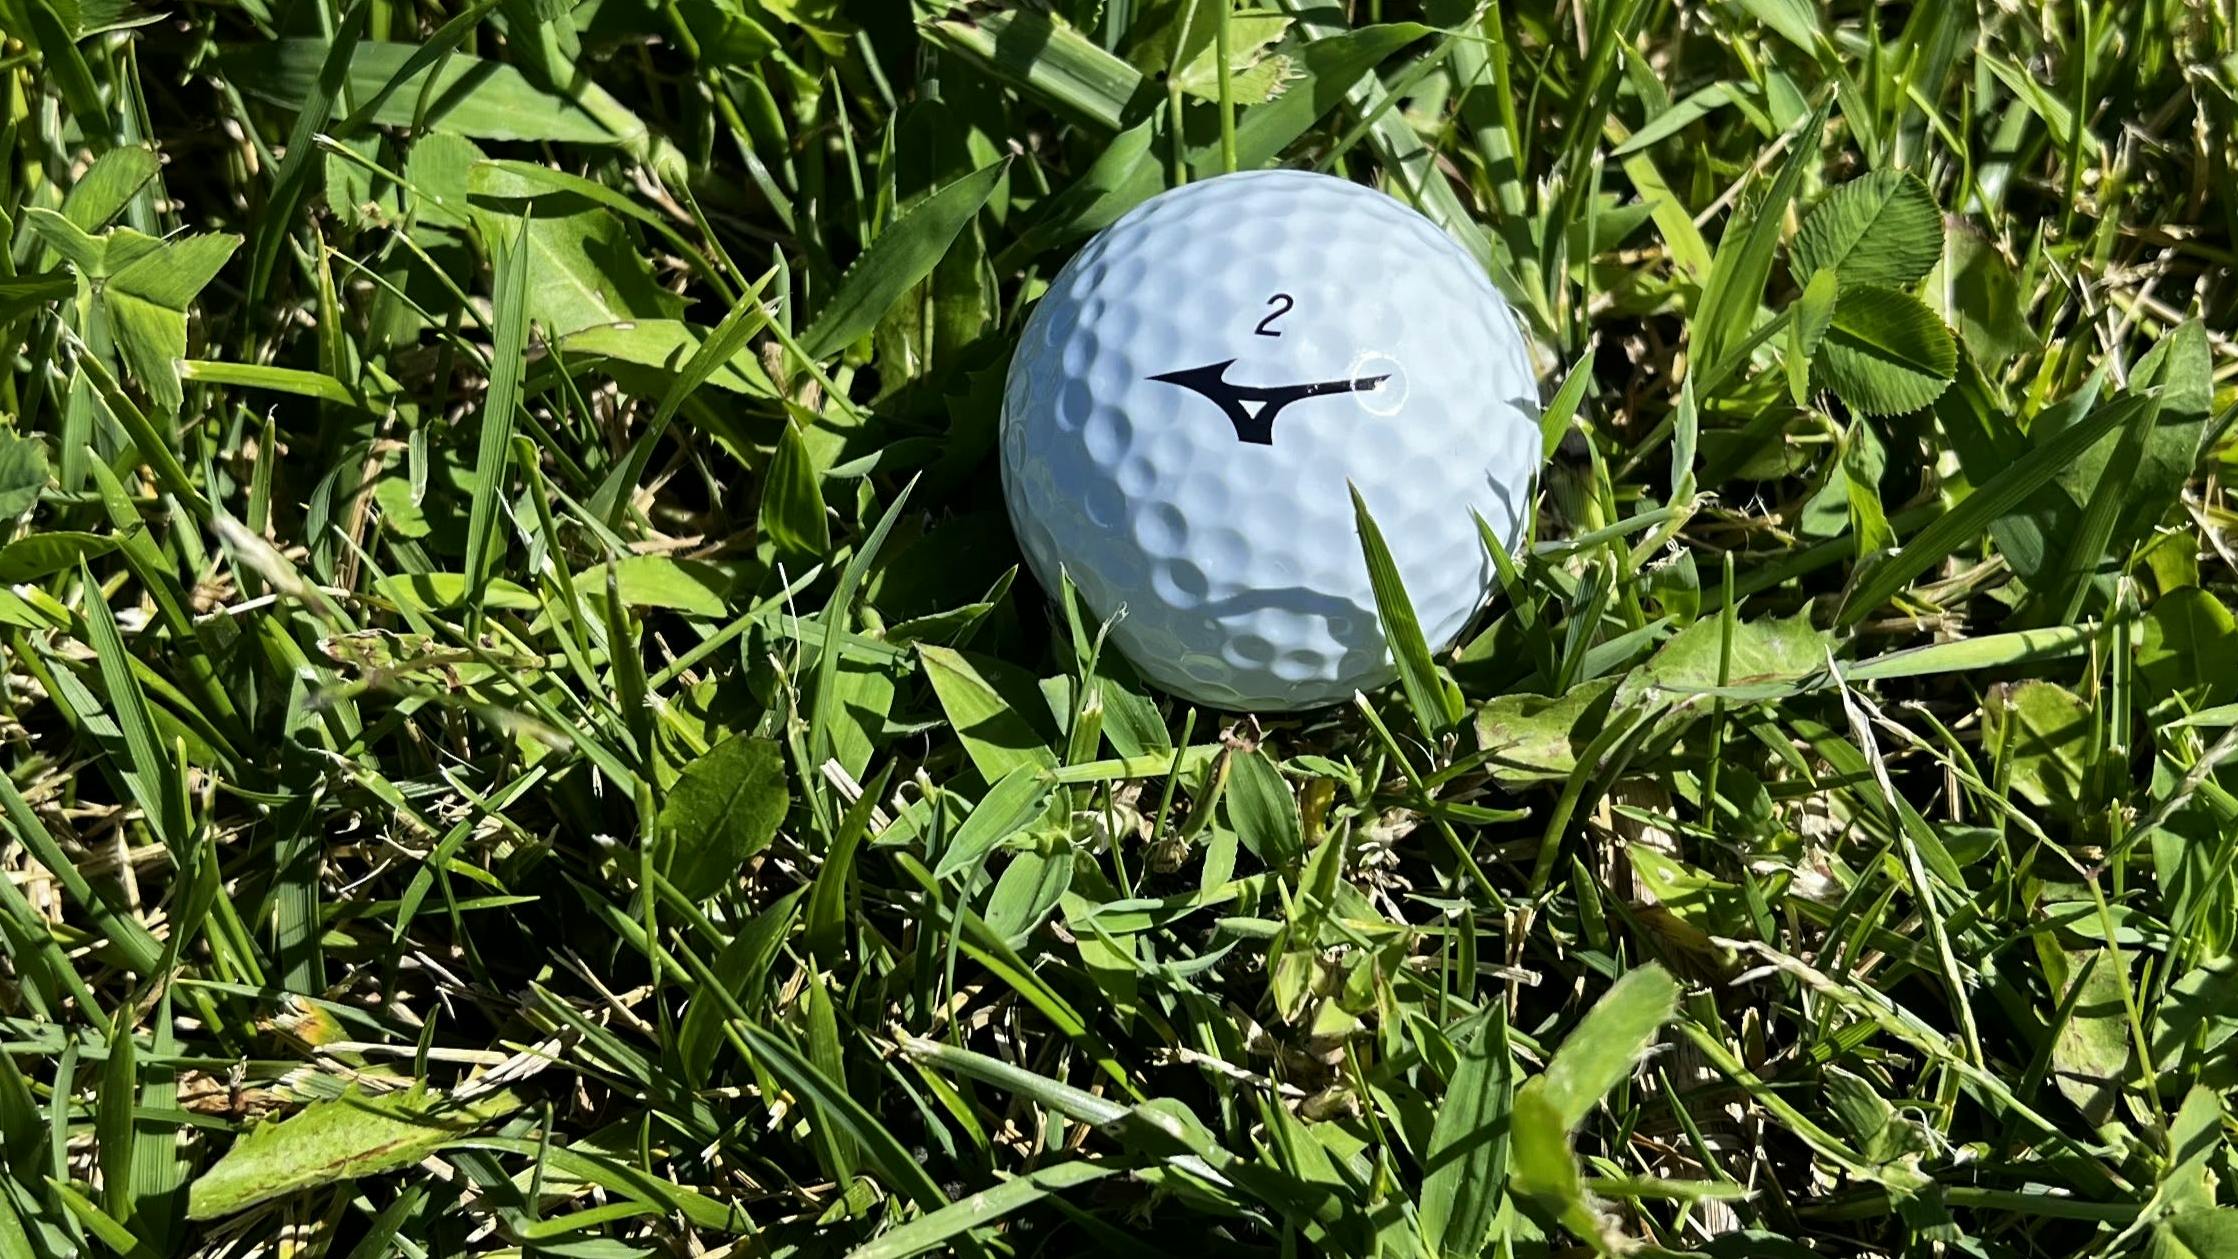 A Mizuno RB Tour X Golf Ball lying in the grass.